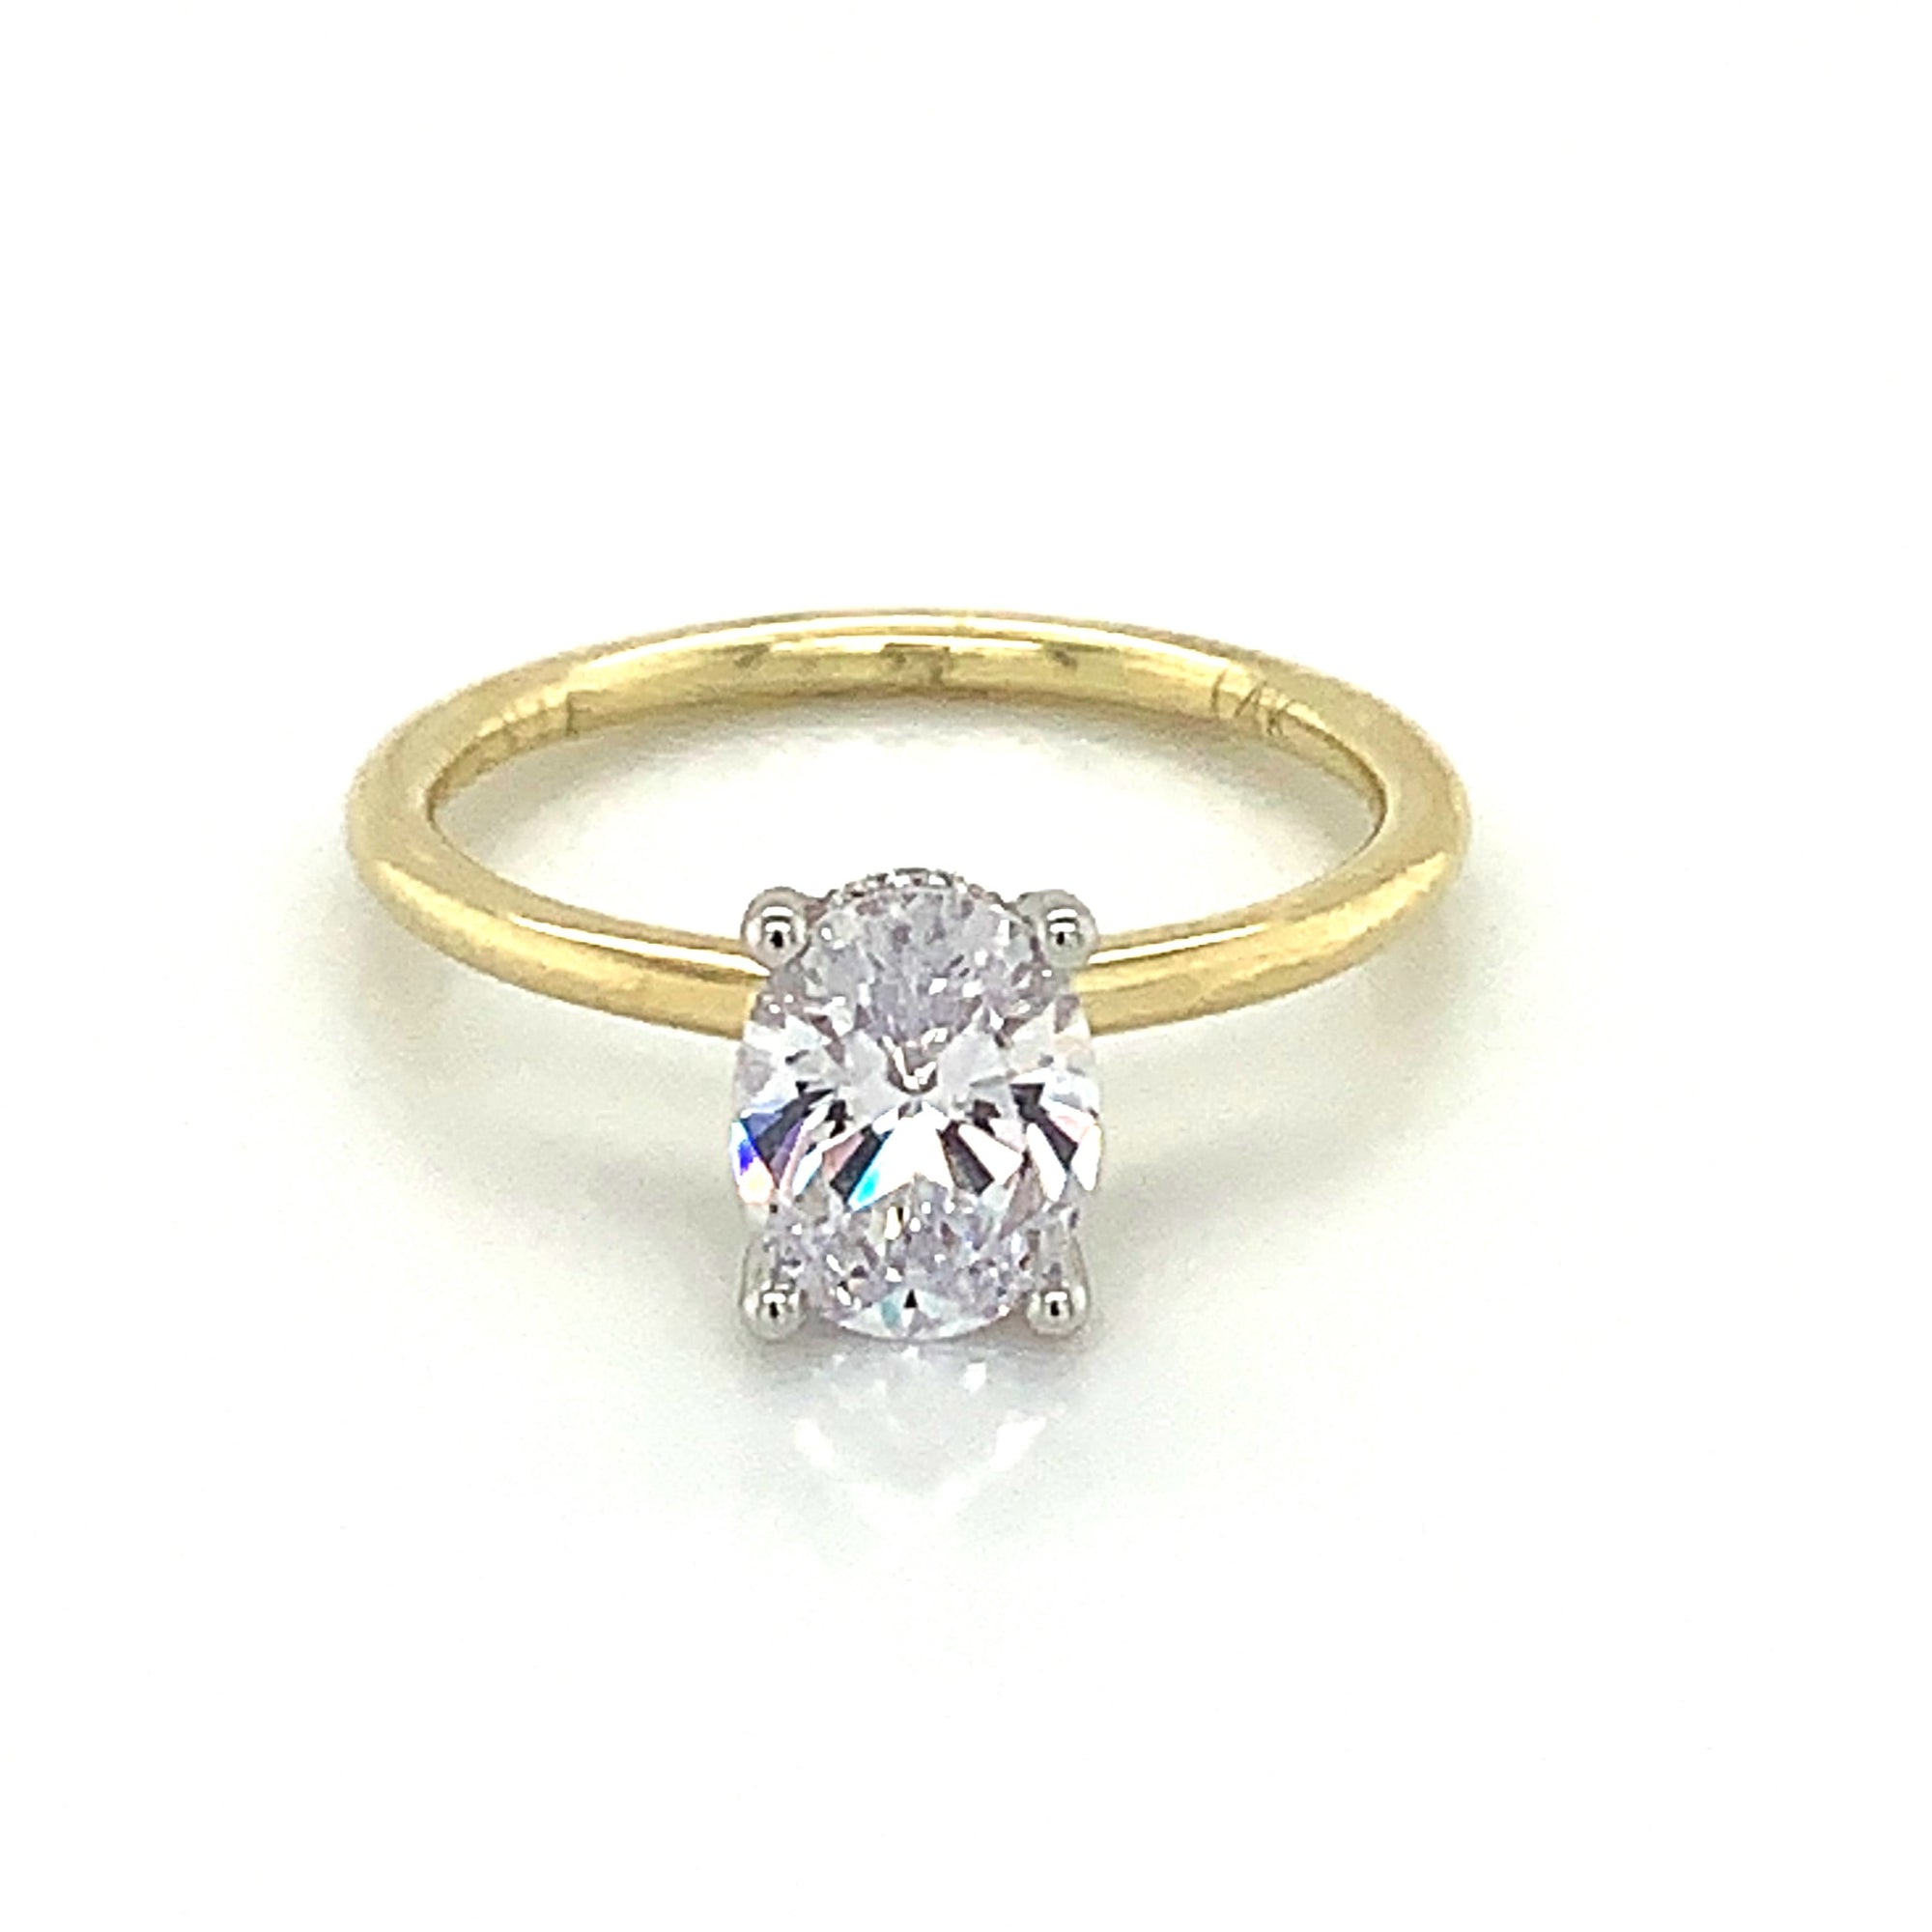 Sylvie 14K Yellow Gold Oval Hidden Halo Diamond Engagement Ring